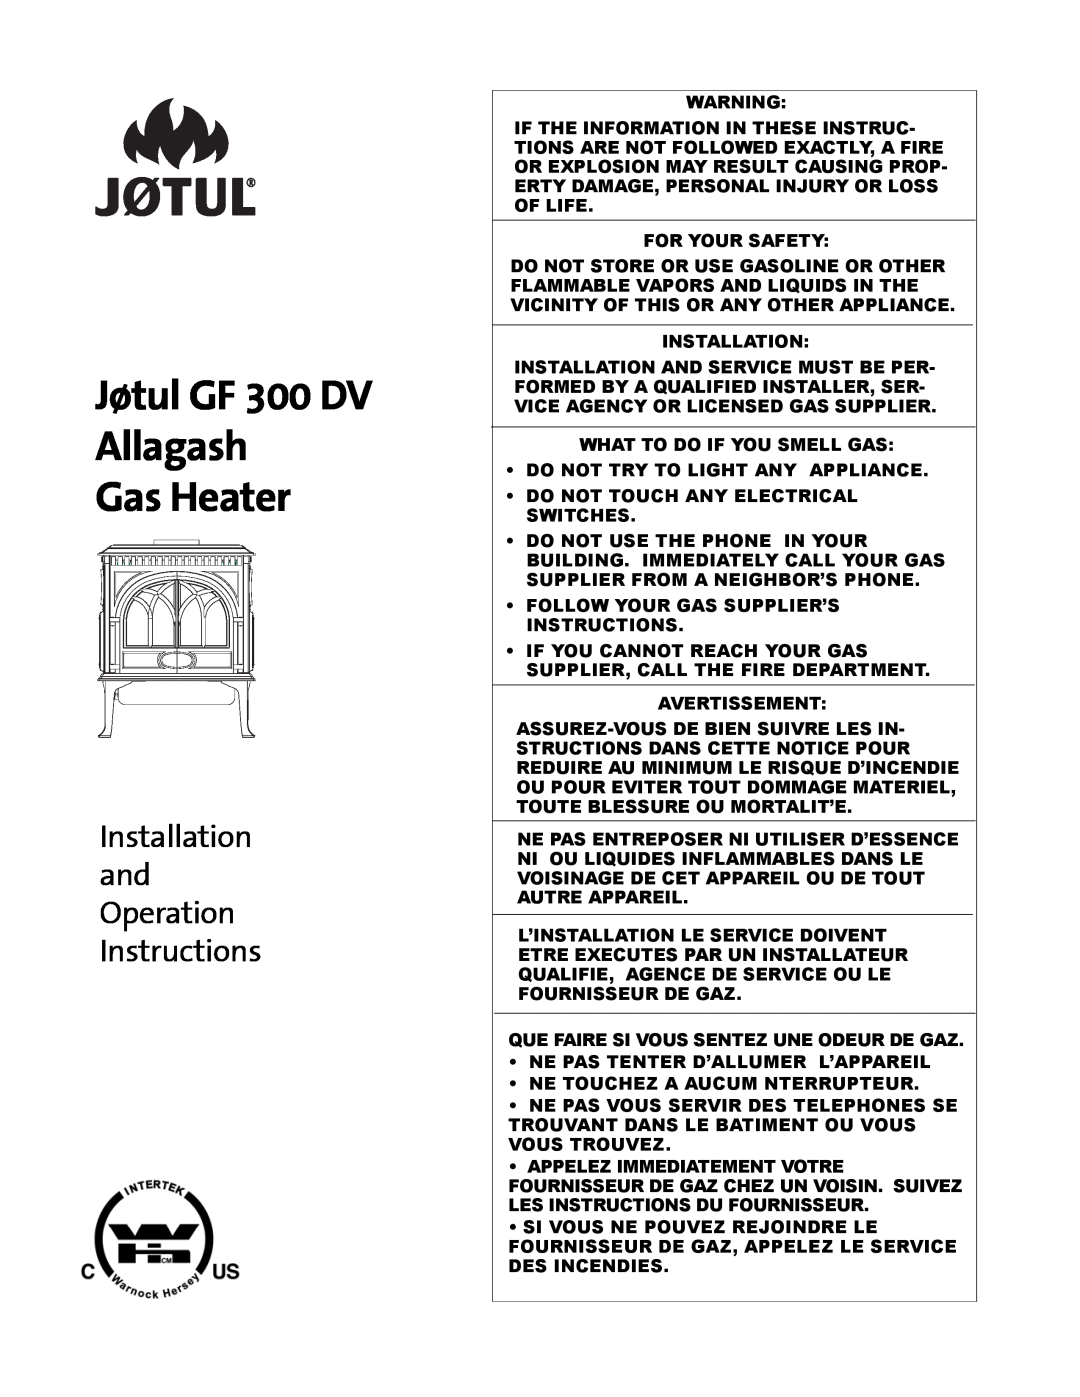 Jotul GF300 DV manual Jøtul GF 300 DV Allagash Gas Heater, Installation and Operation Instructions 